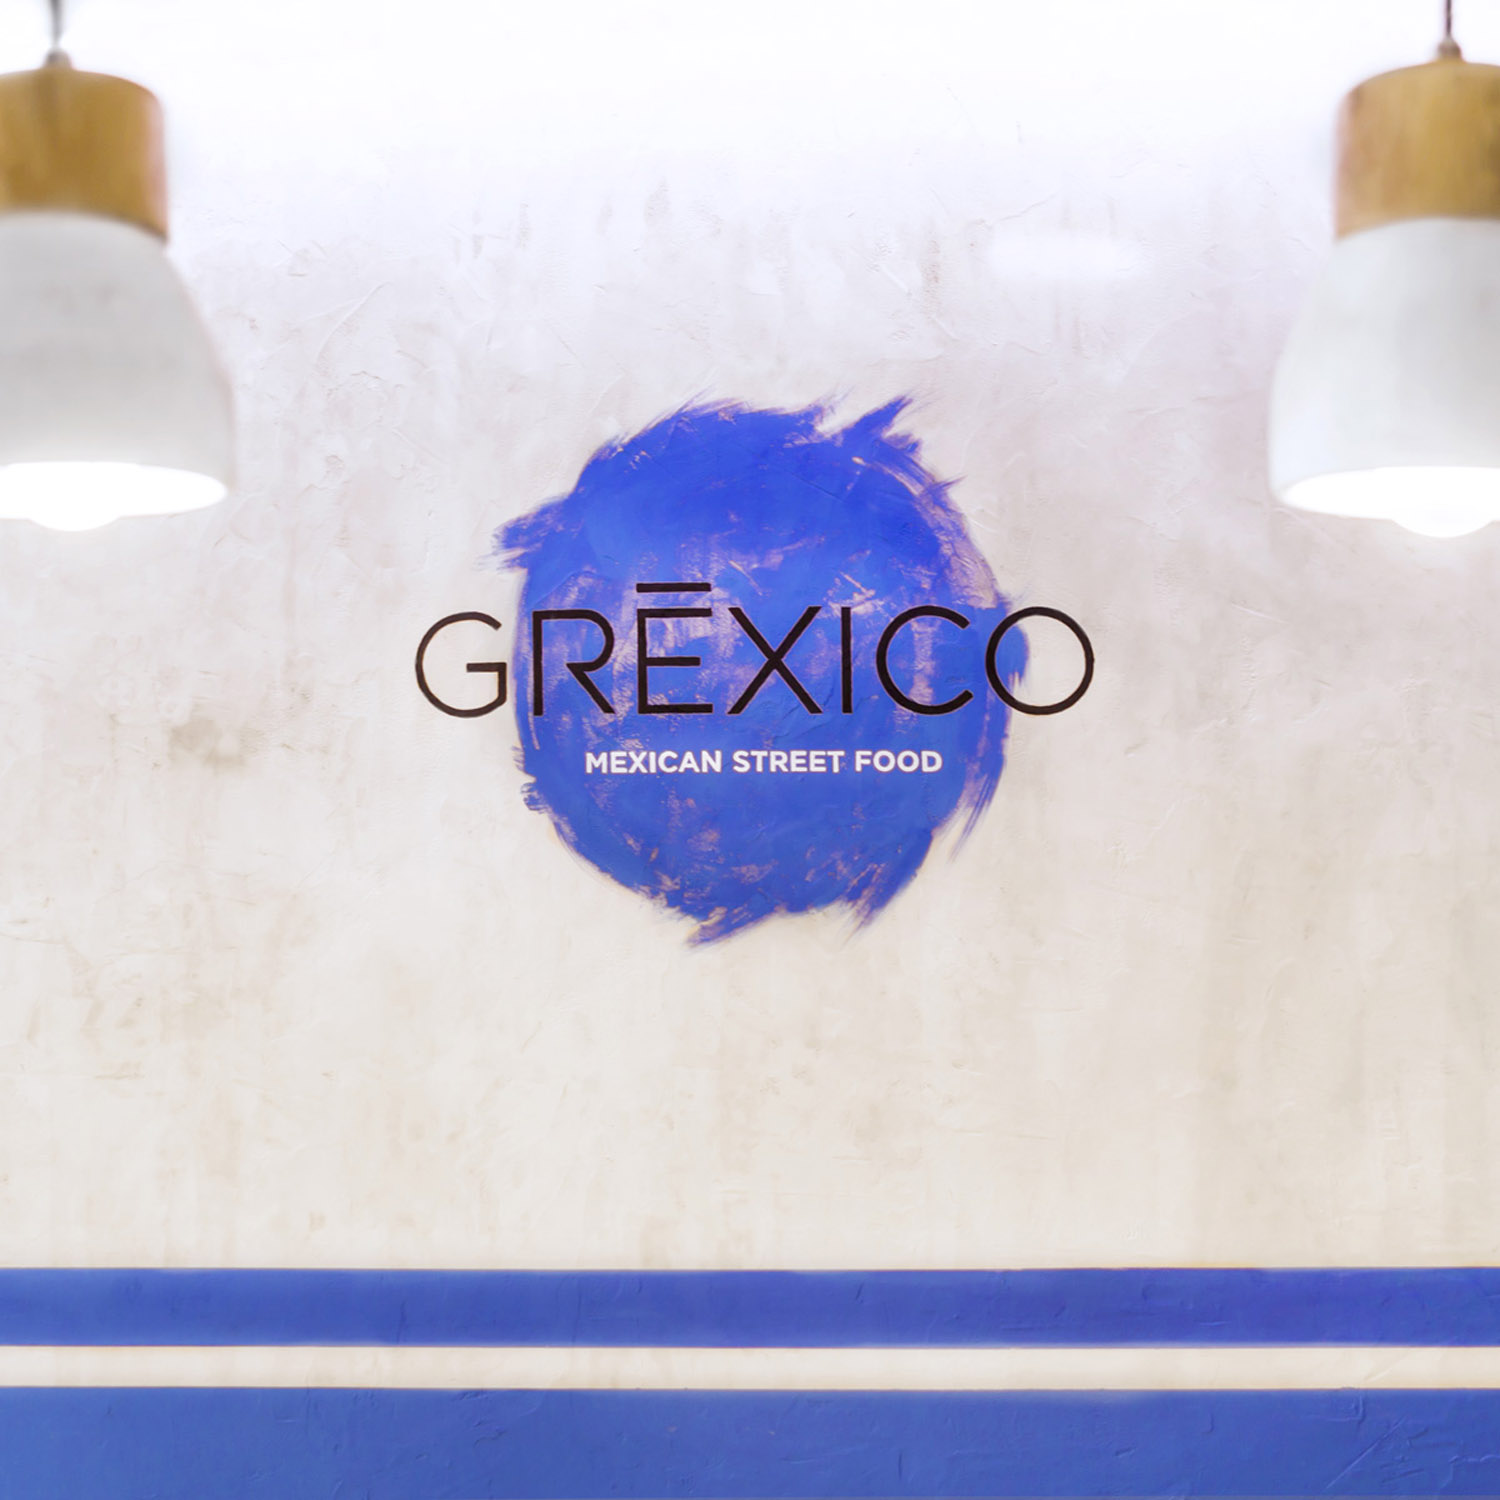  Grexico Restaurant  Location: Athens, Greece 